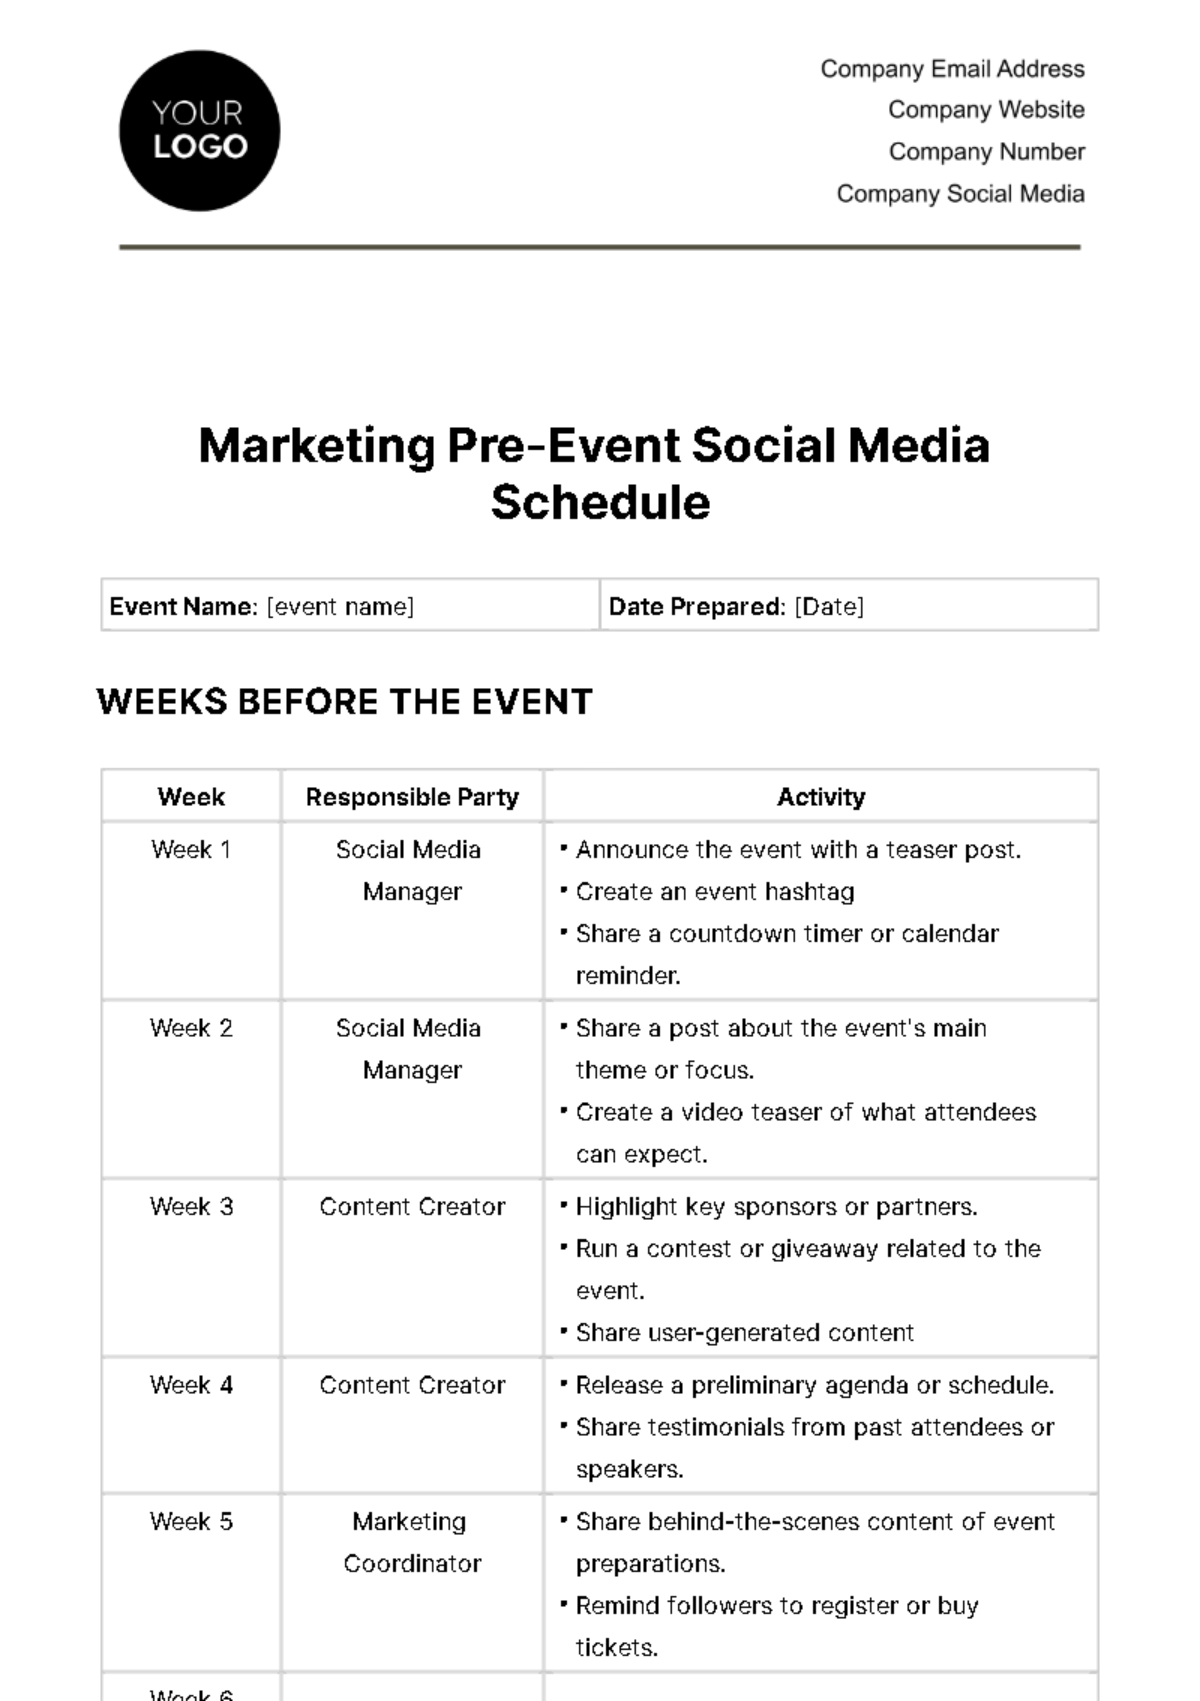 Free Marketing Pre-Event Social Media Schedule Template